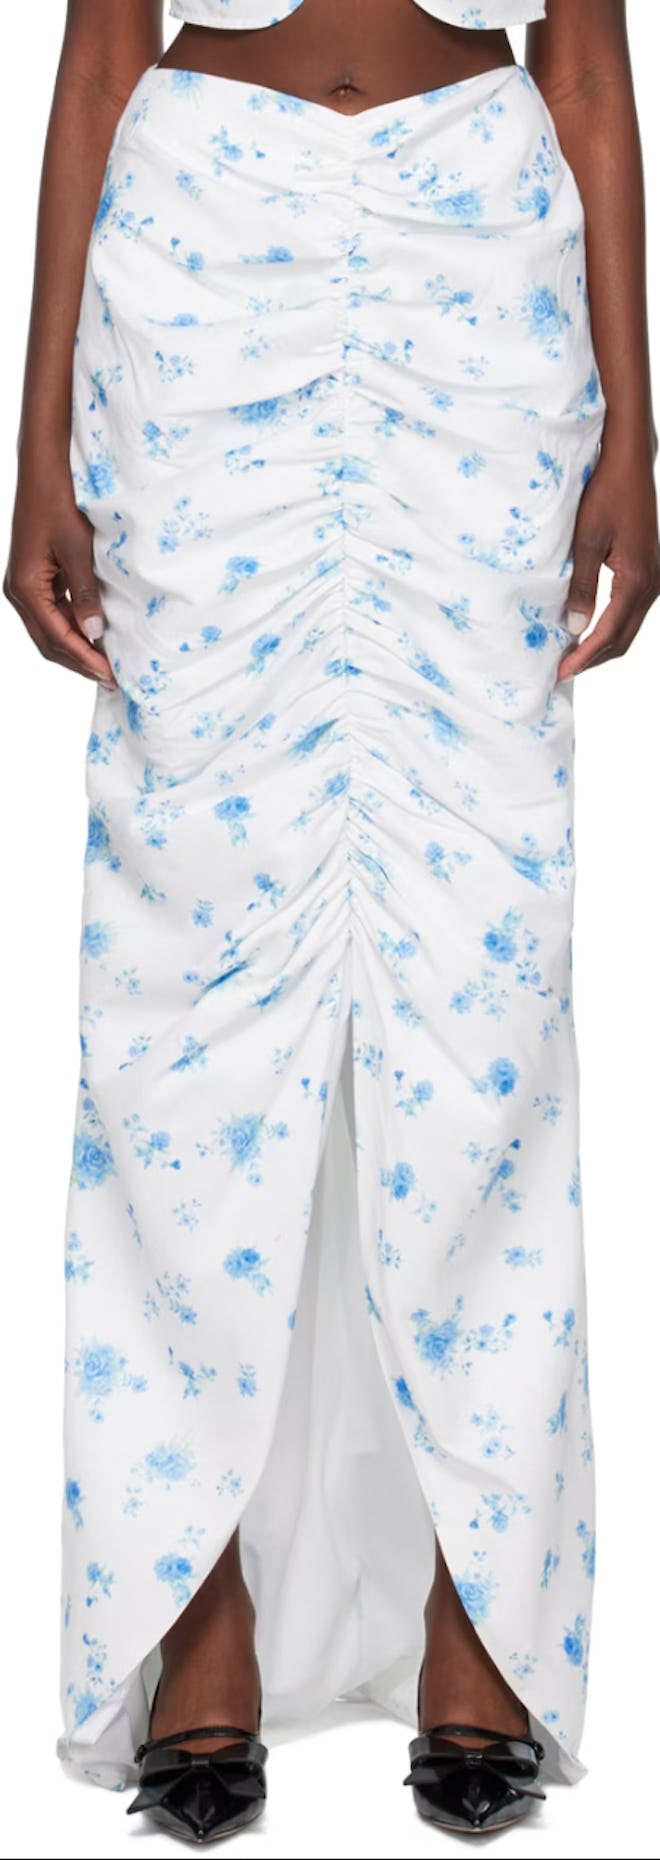 White Floral Maxi Skirt